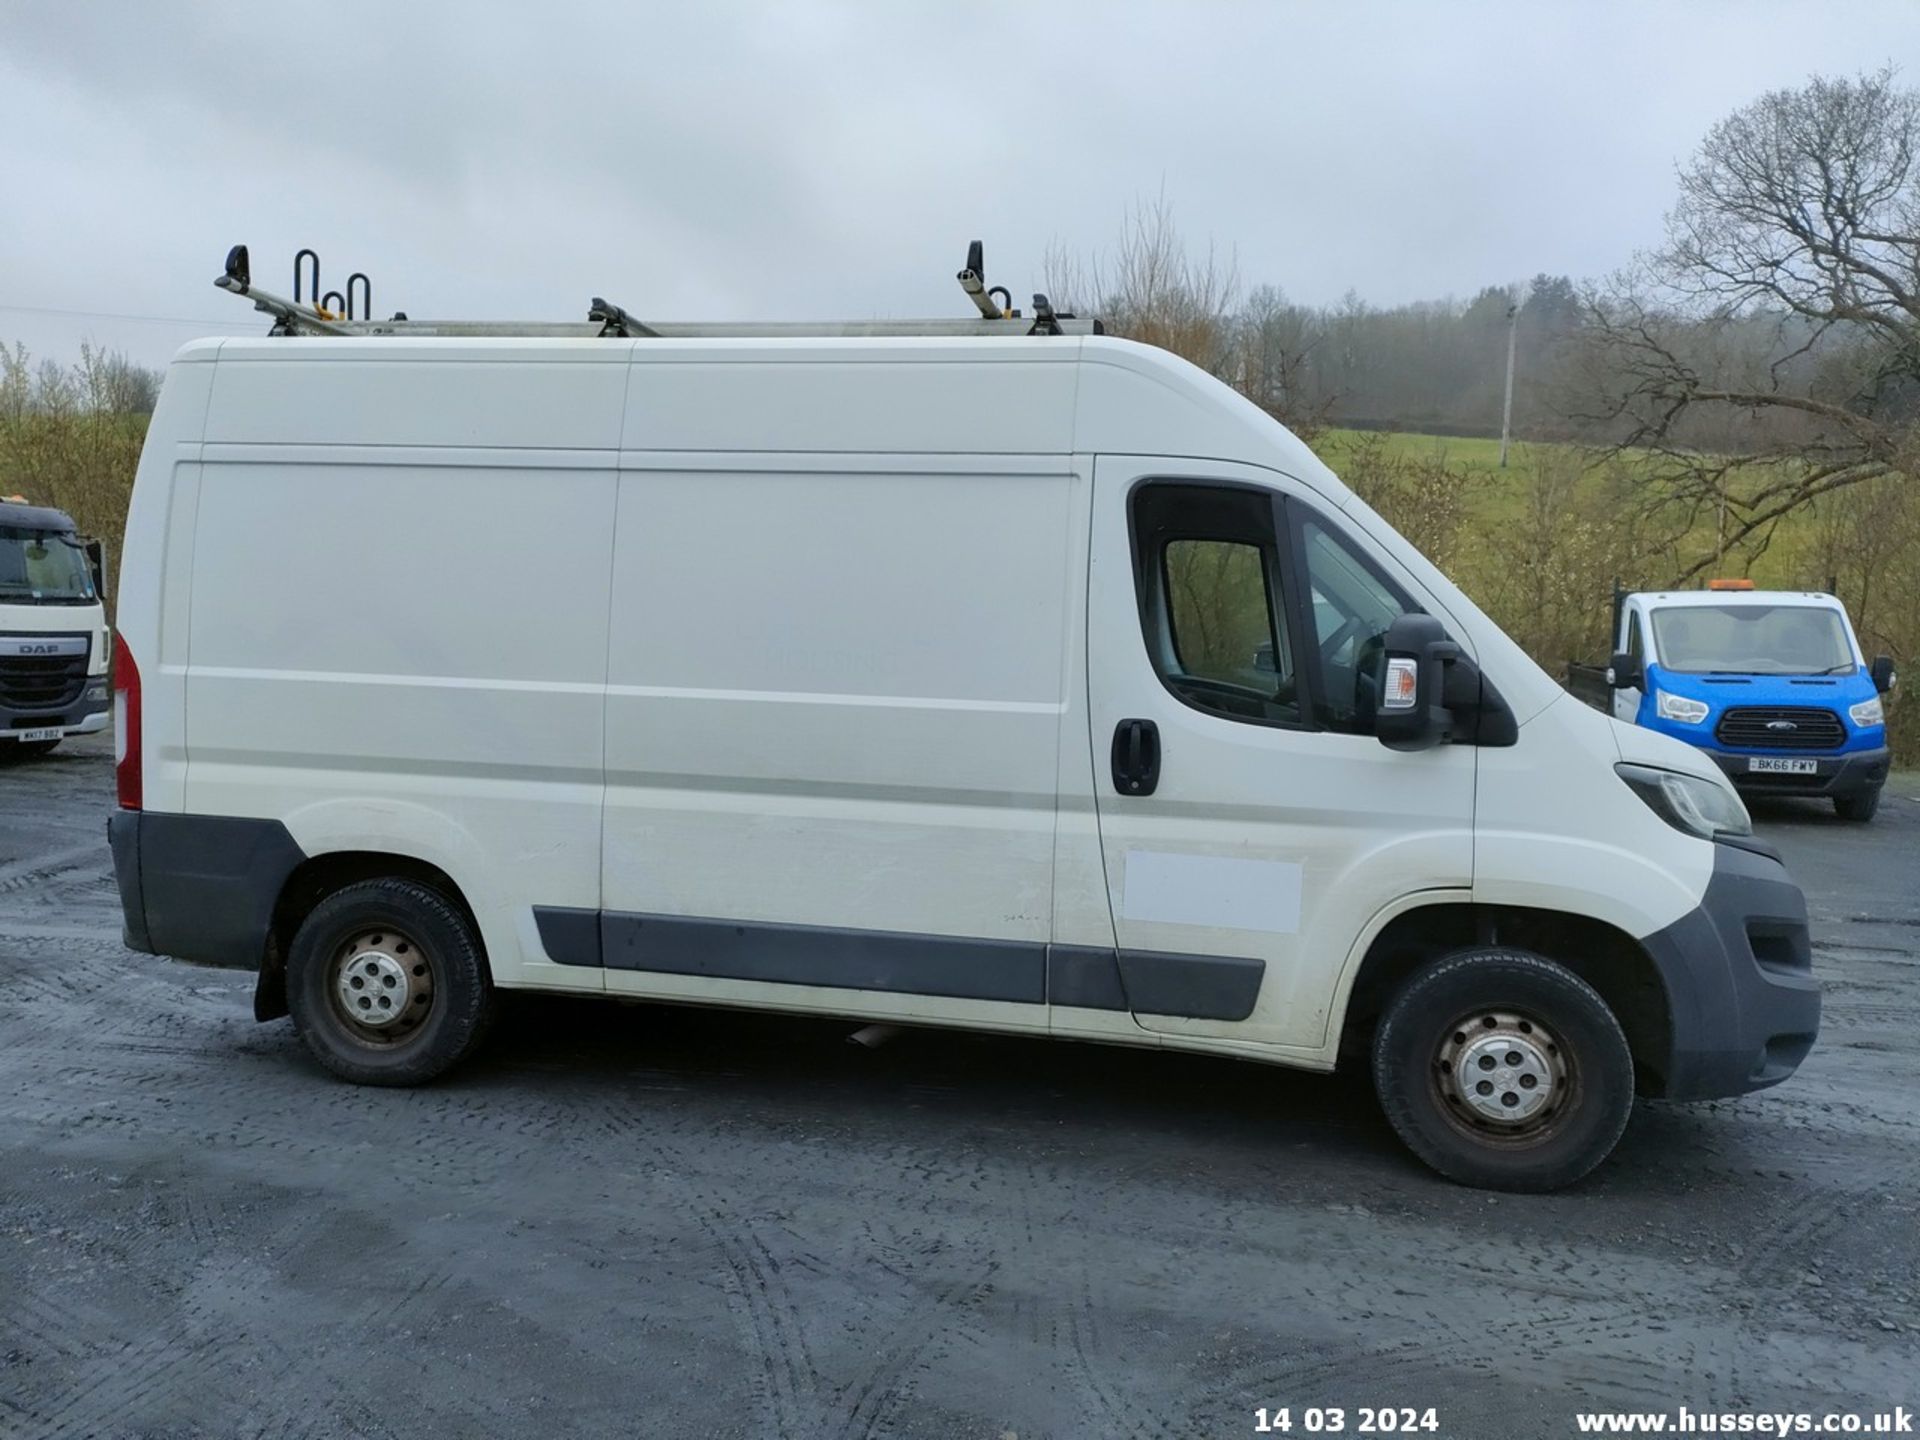 16/16 PEUGEOT BOXER 335 L2H2 HDI - 2198cc 5dr Van (White, 131k) - Image 44 of 62